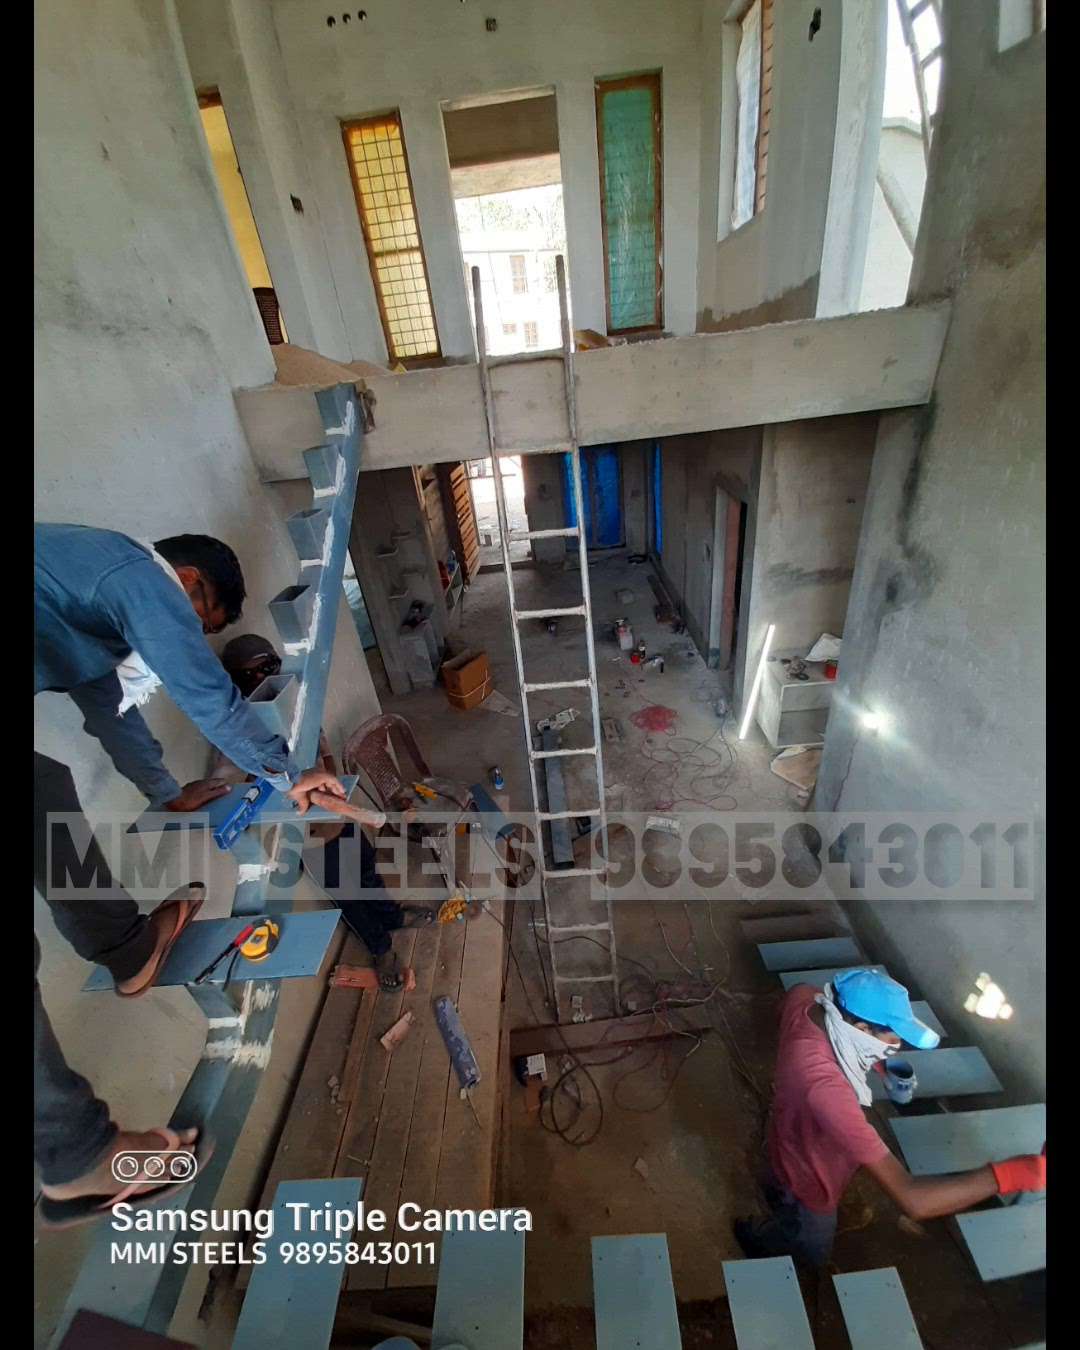 Location  -: Pala .Kottayam 
Clint  -:  Sanu pb
Work -: fabricator Staircase With Wood and Toughened Glass #GlassHandRailStaircase #fabricdesign #homedecor #interiordesign #keralatourism #keralahomedesign #khdc #instagram #kerala #keralaface